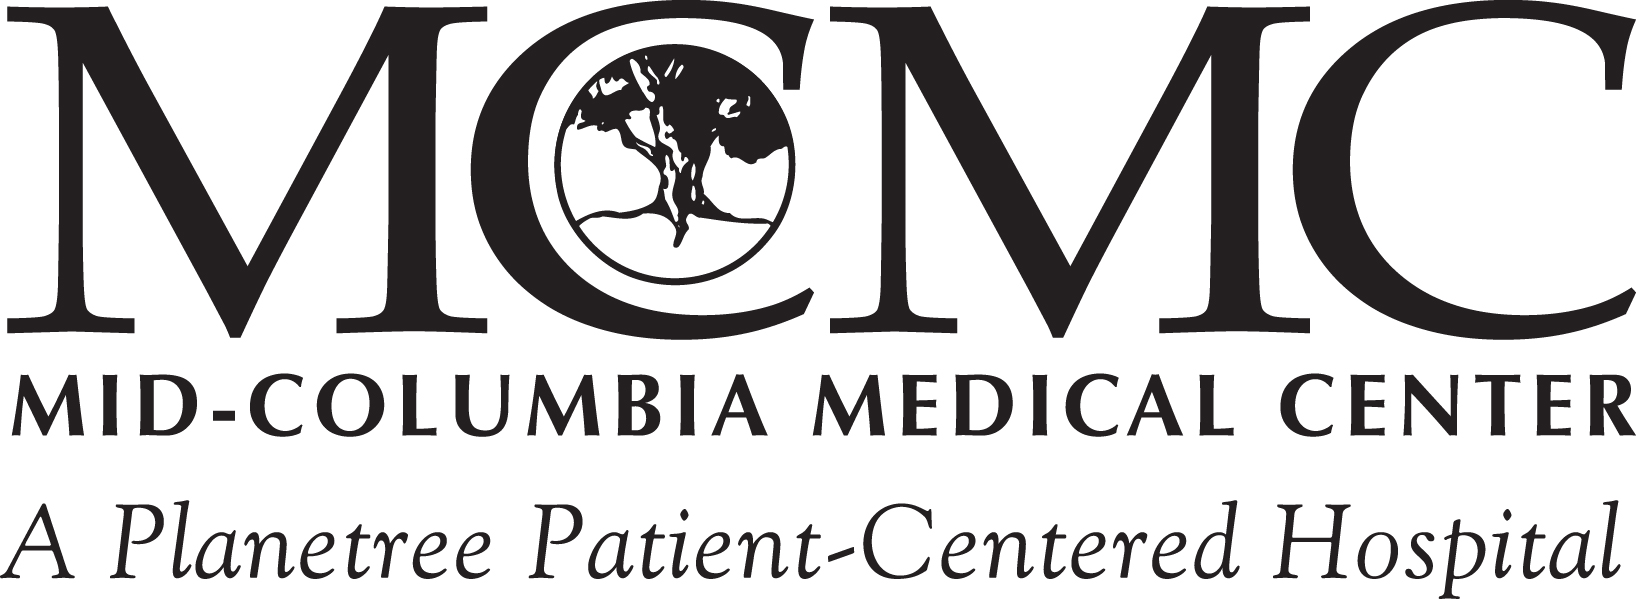 Mid-Columbia Medical Center logo